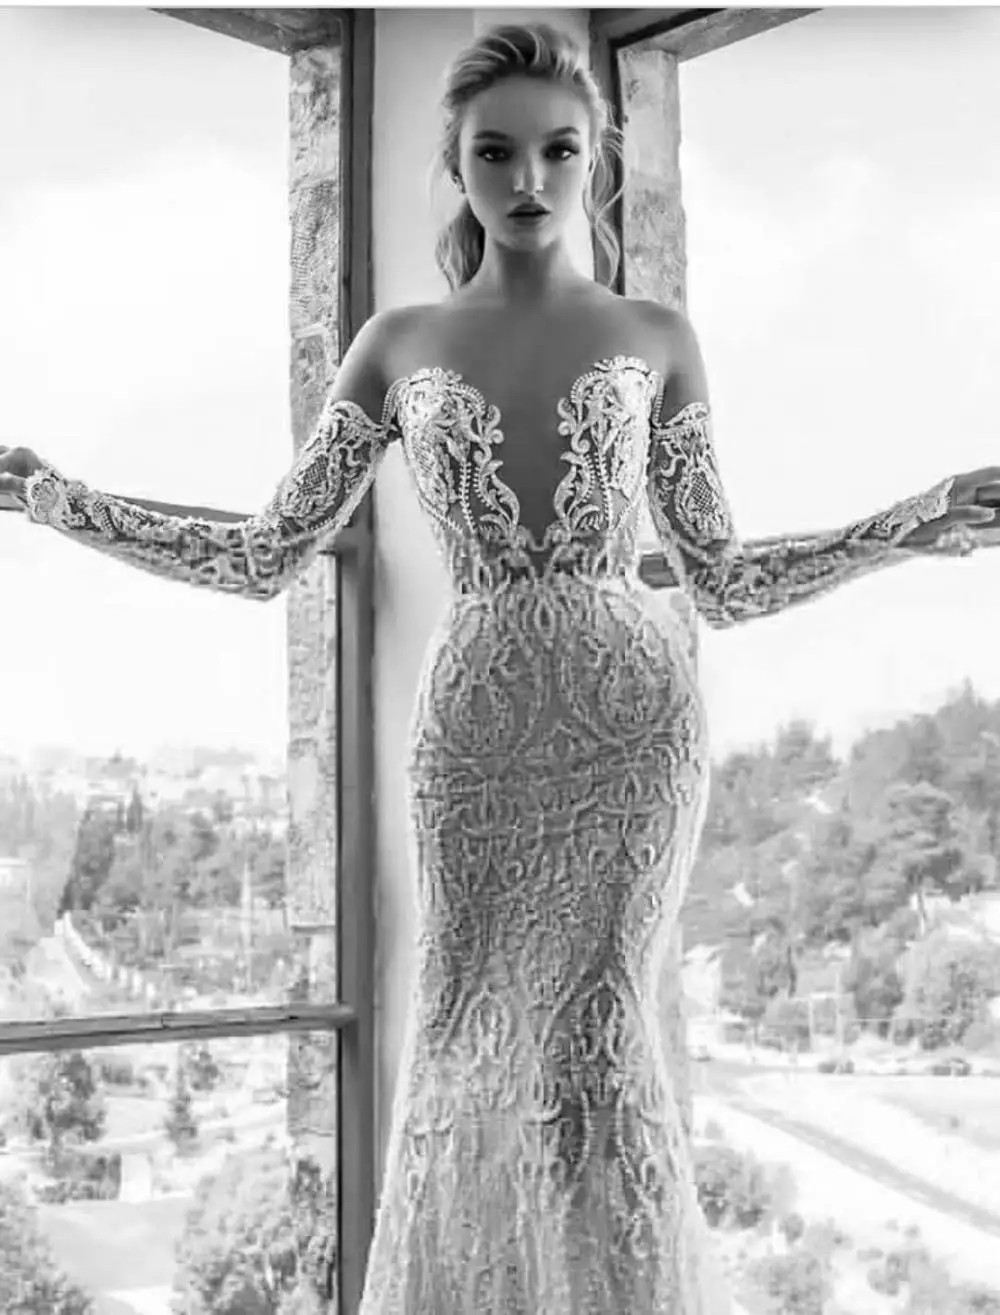 lattice lace wedding dress